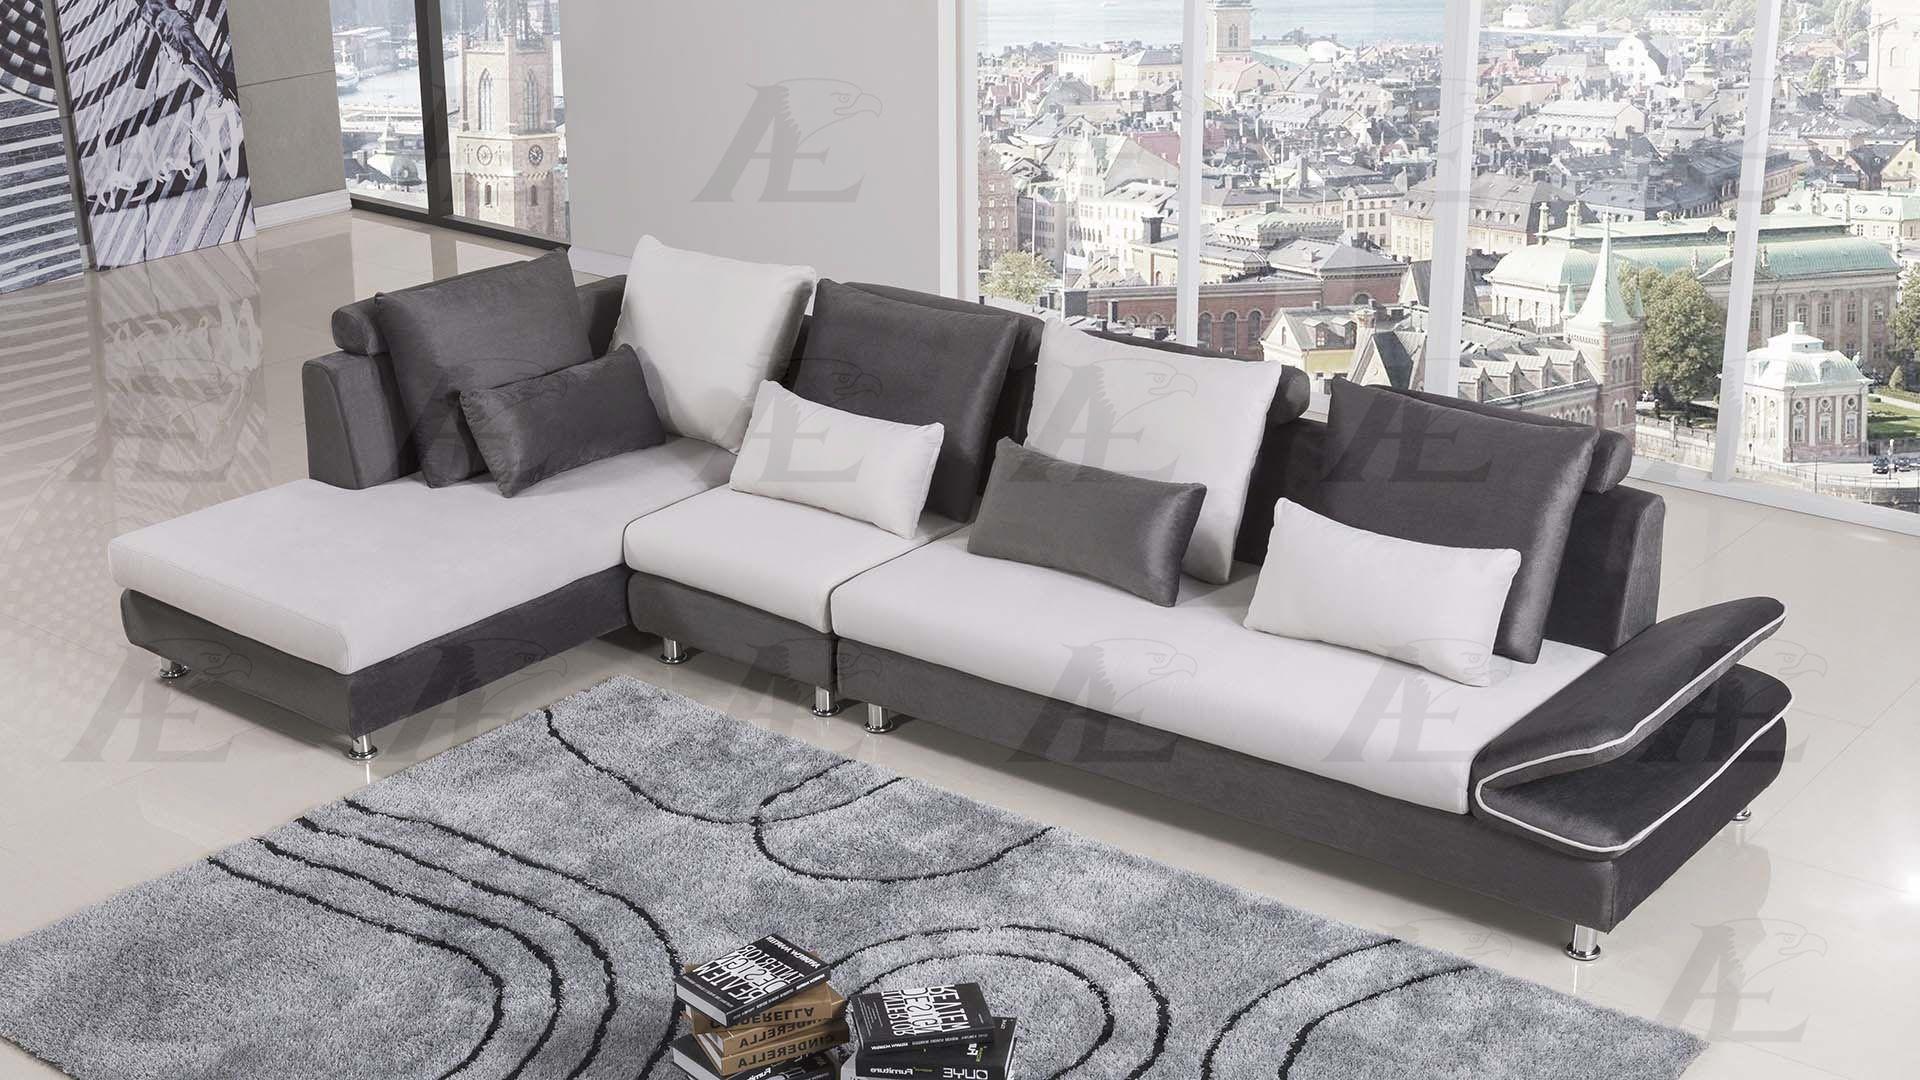 Contemporary, Modern Sectional Sofa AE-L341 AE-L341R in Cream, Gray Fabric